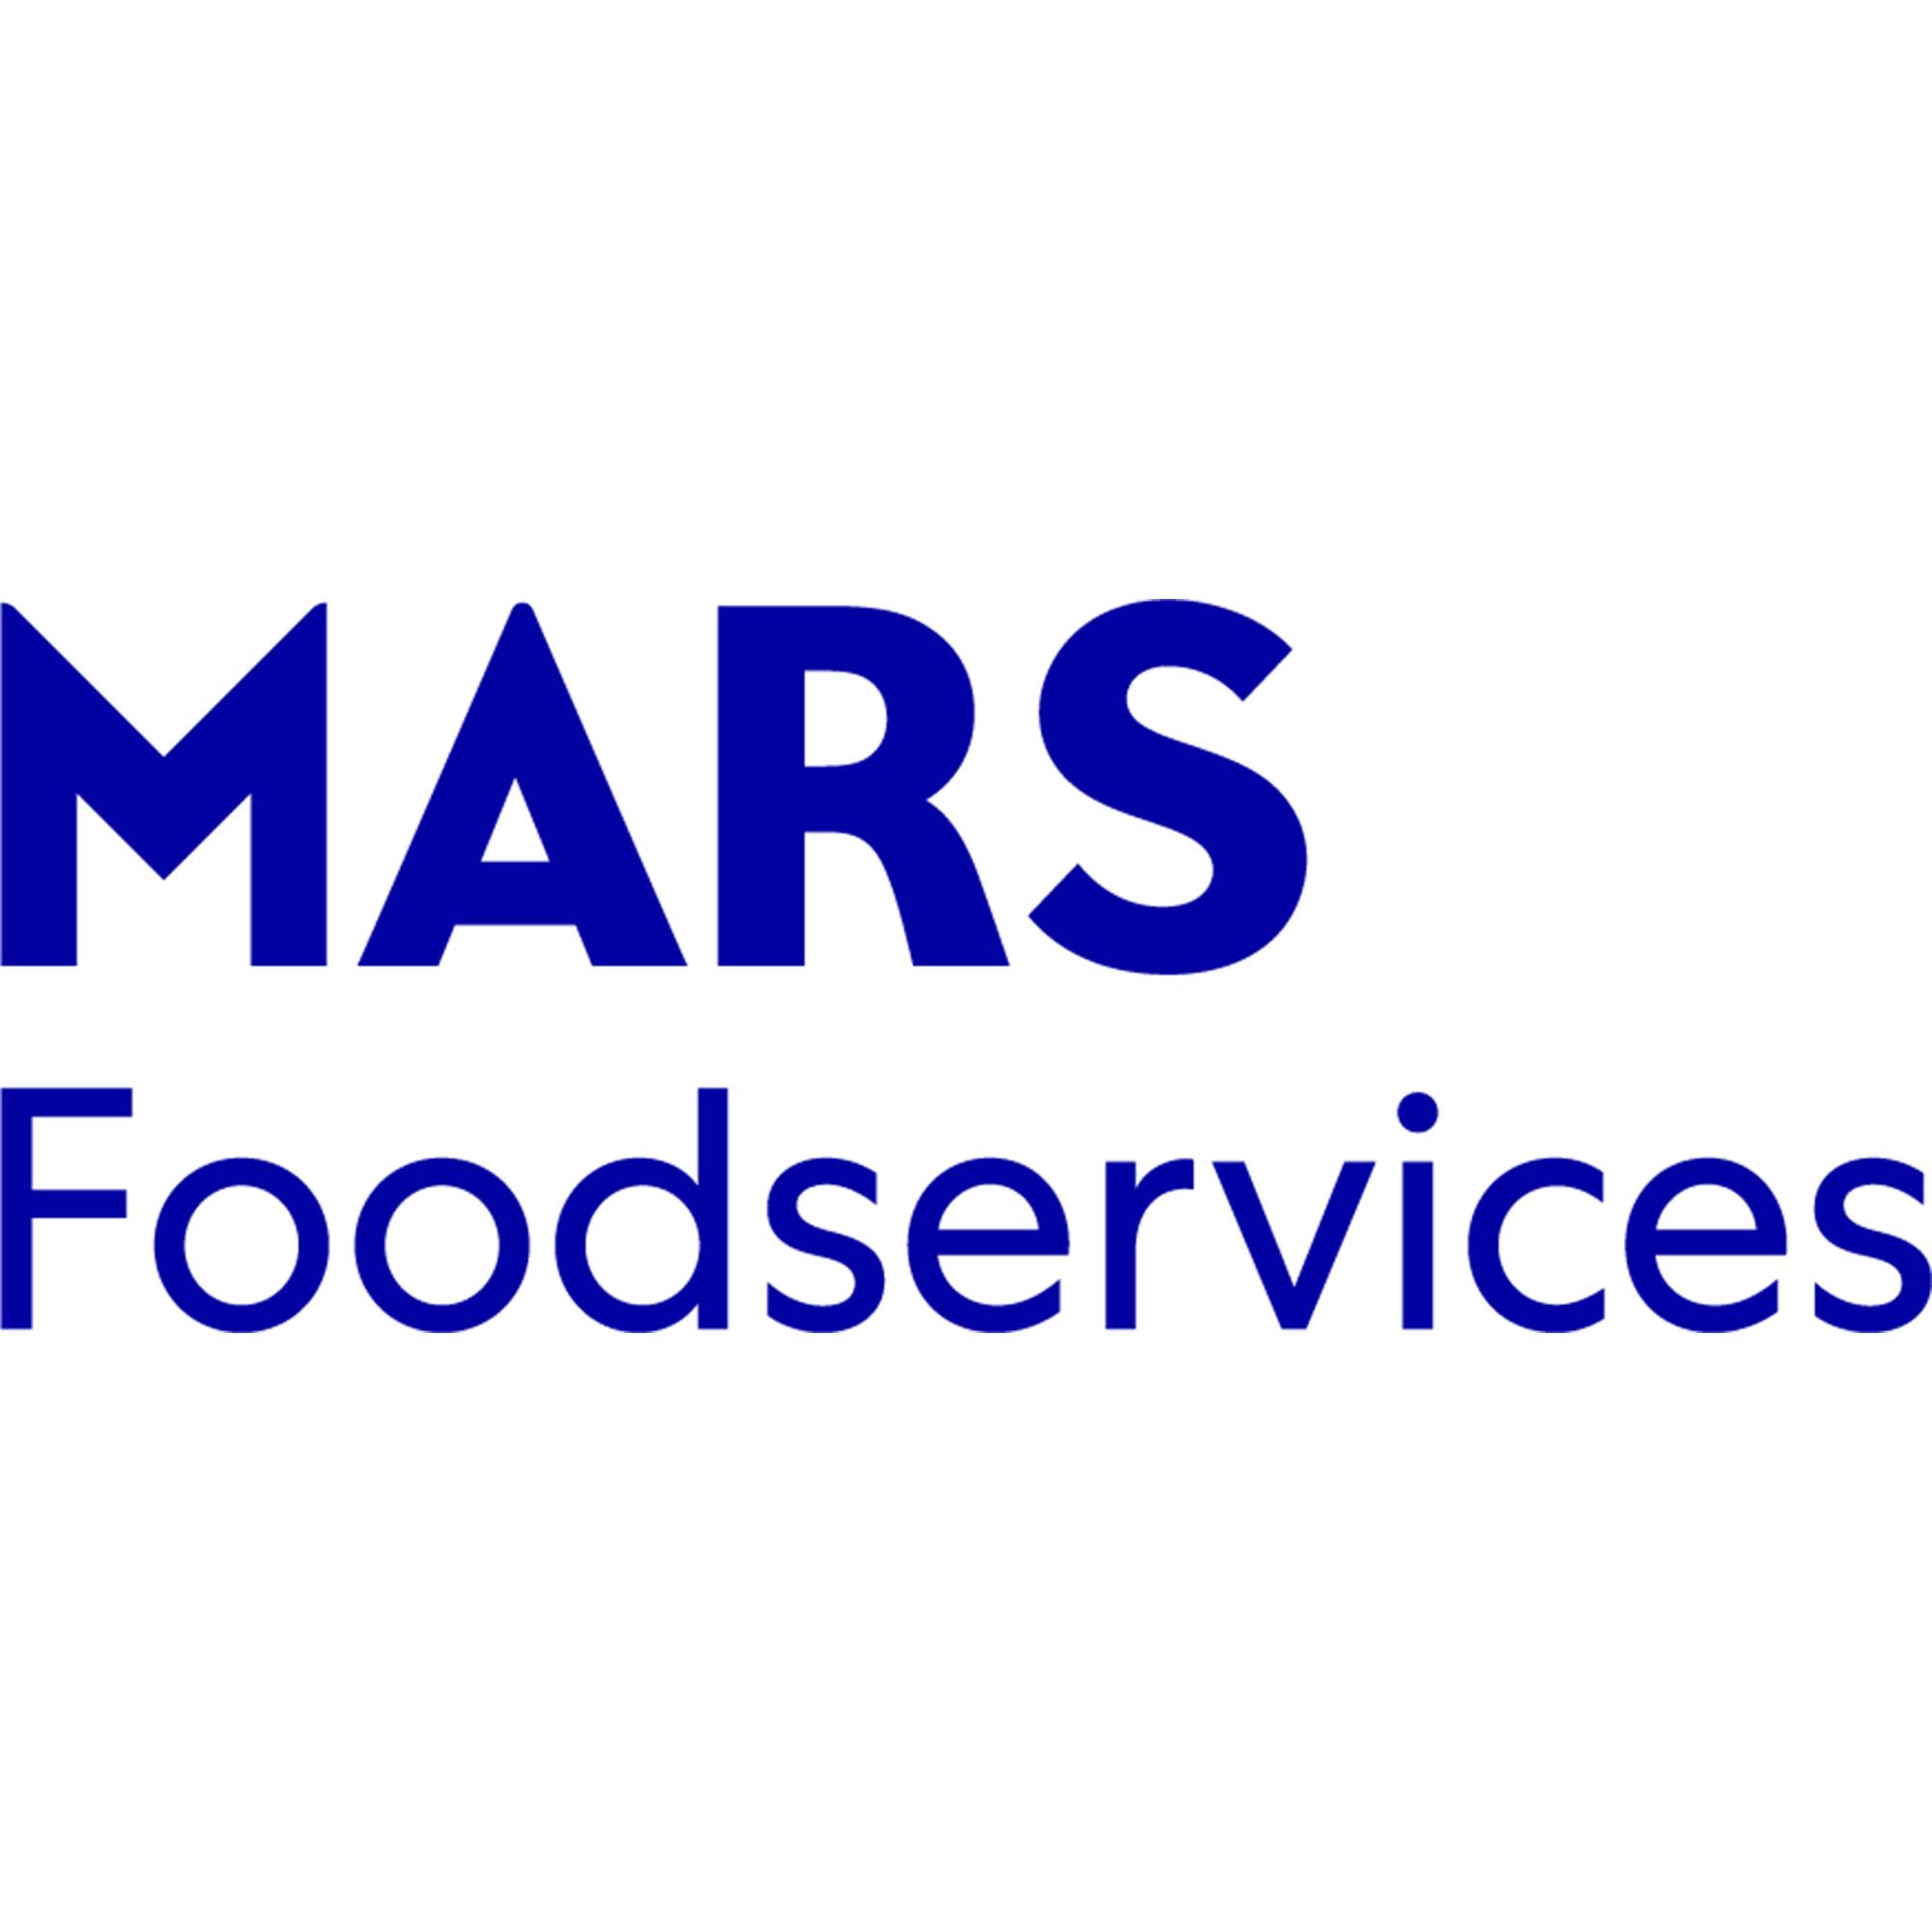 MARS Foodservice Logo